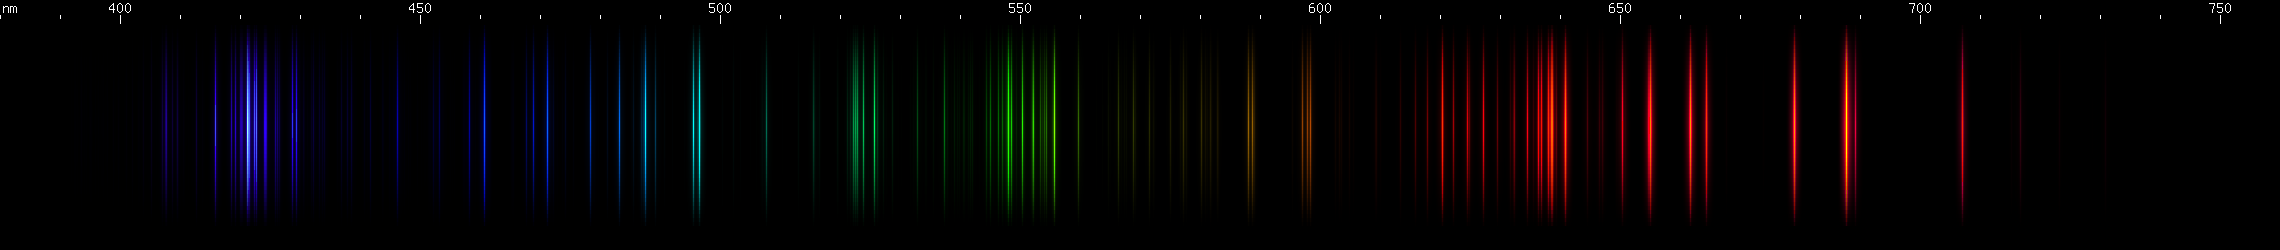 Spectral lines of Strontium.